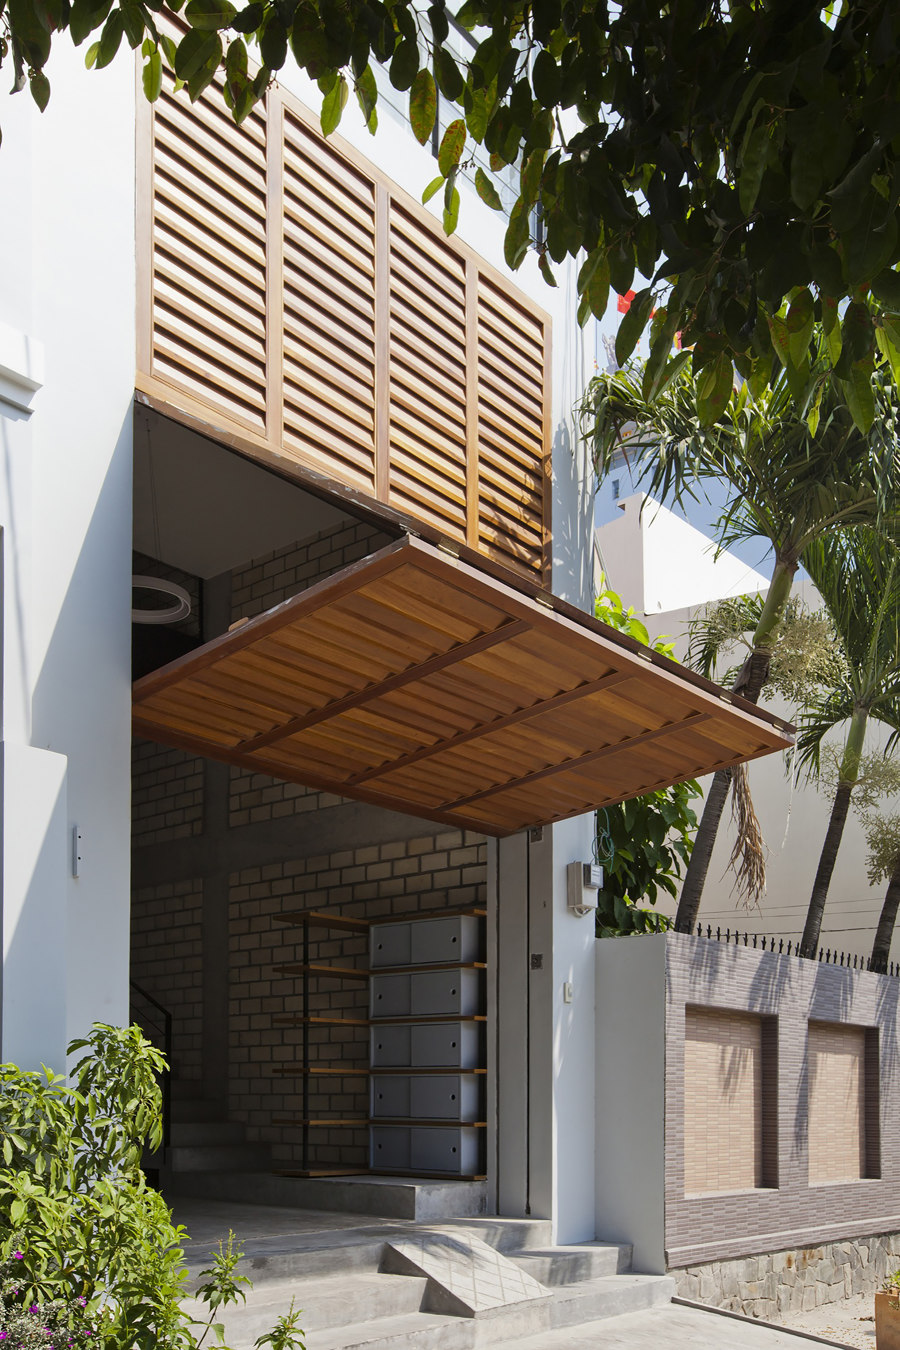 Townhouse with a Folding-Up Shutter von MM++ Architects | Zweifamilienhäuser